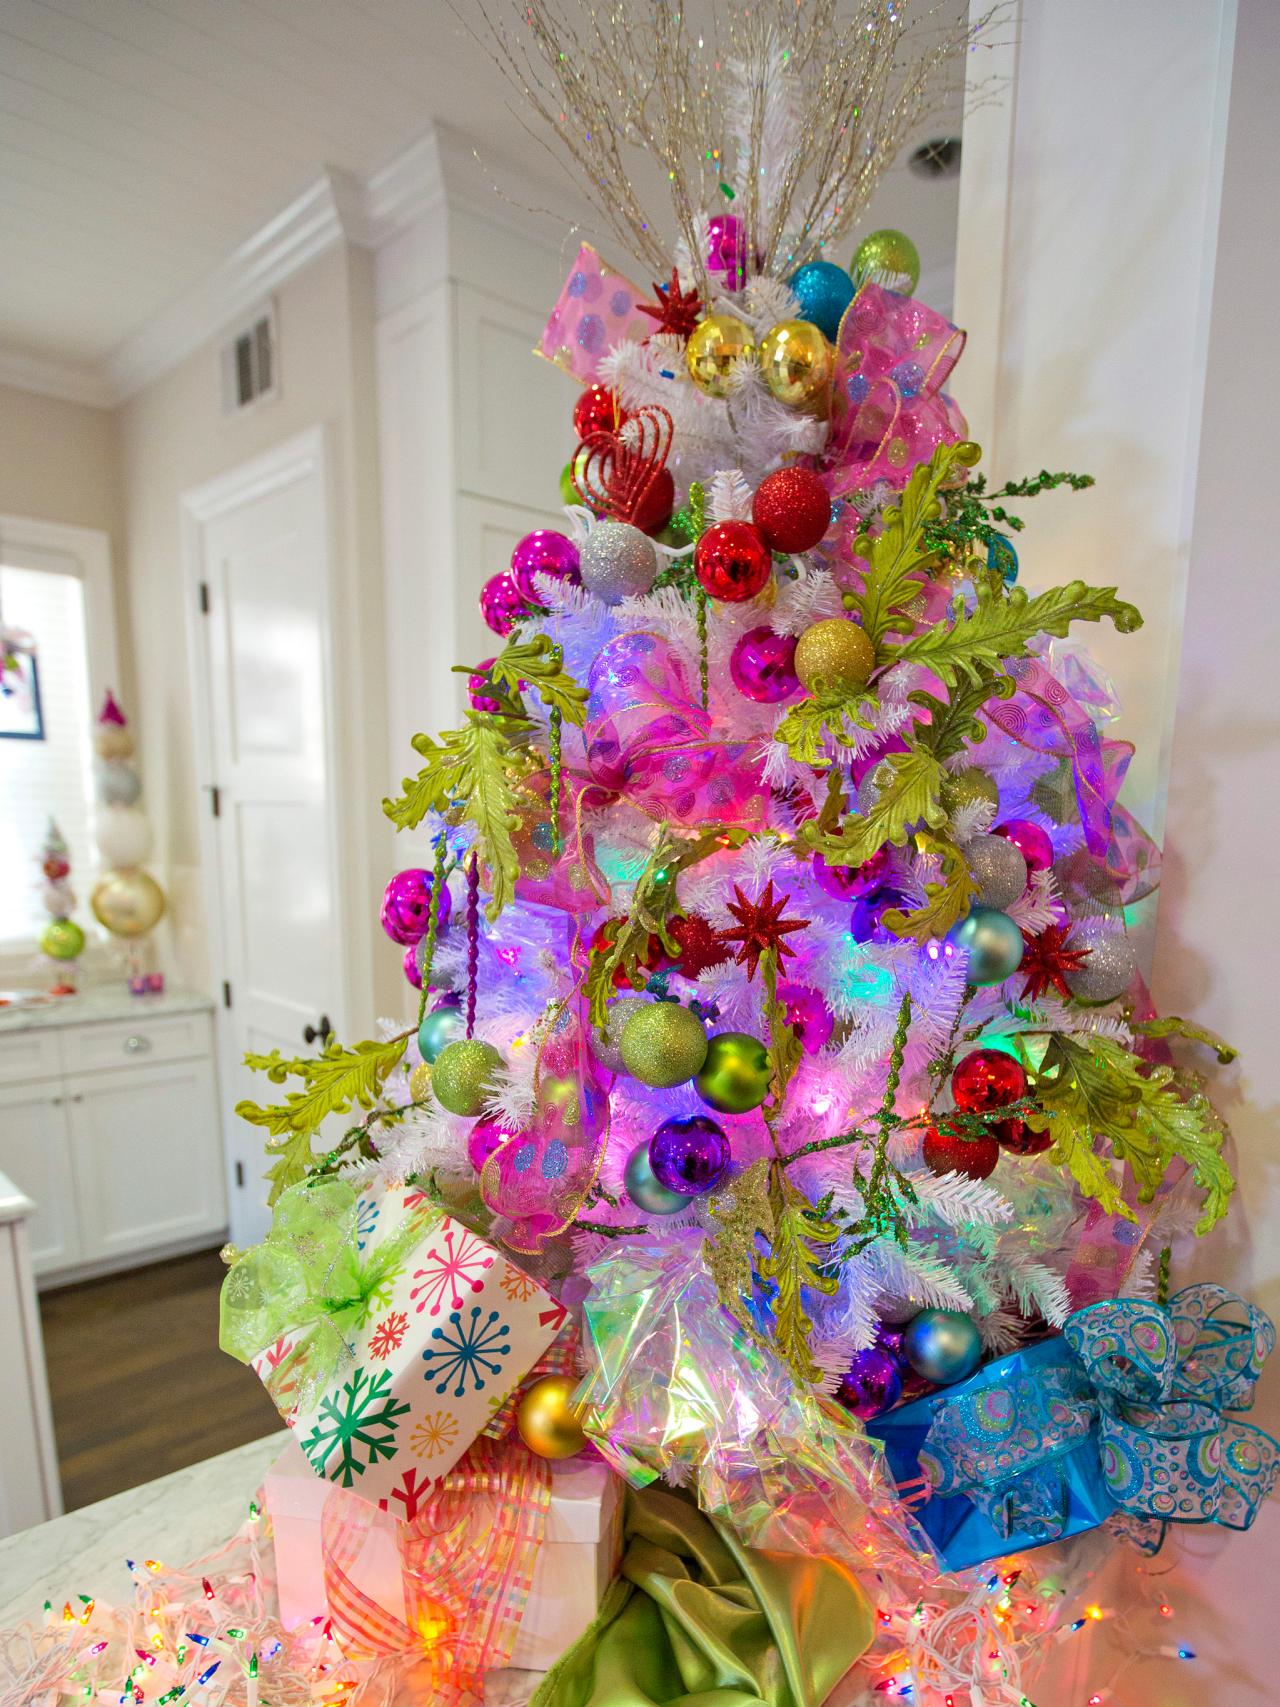 2016-christmas-tree-decorating-ideas